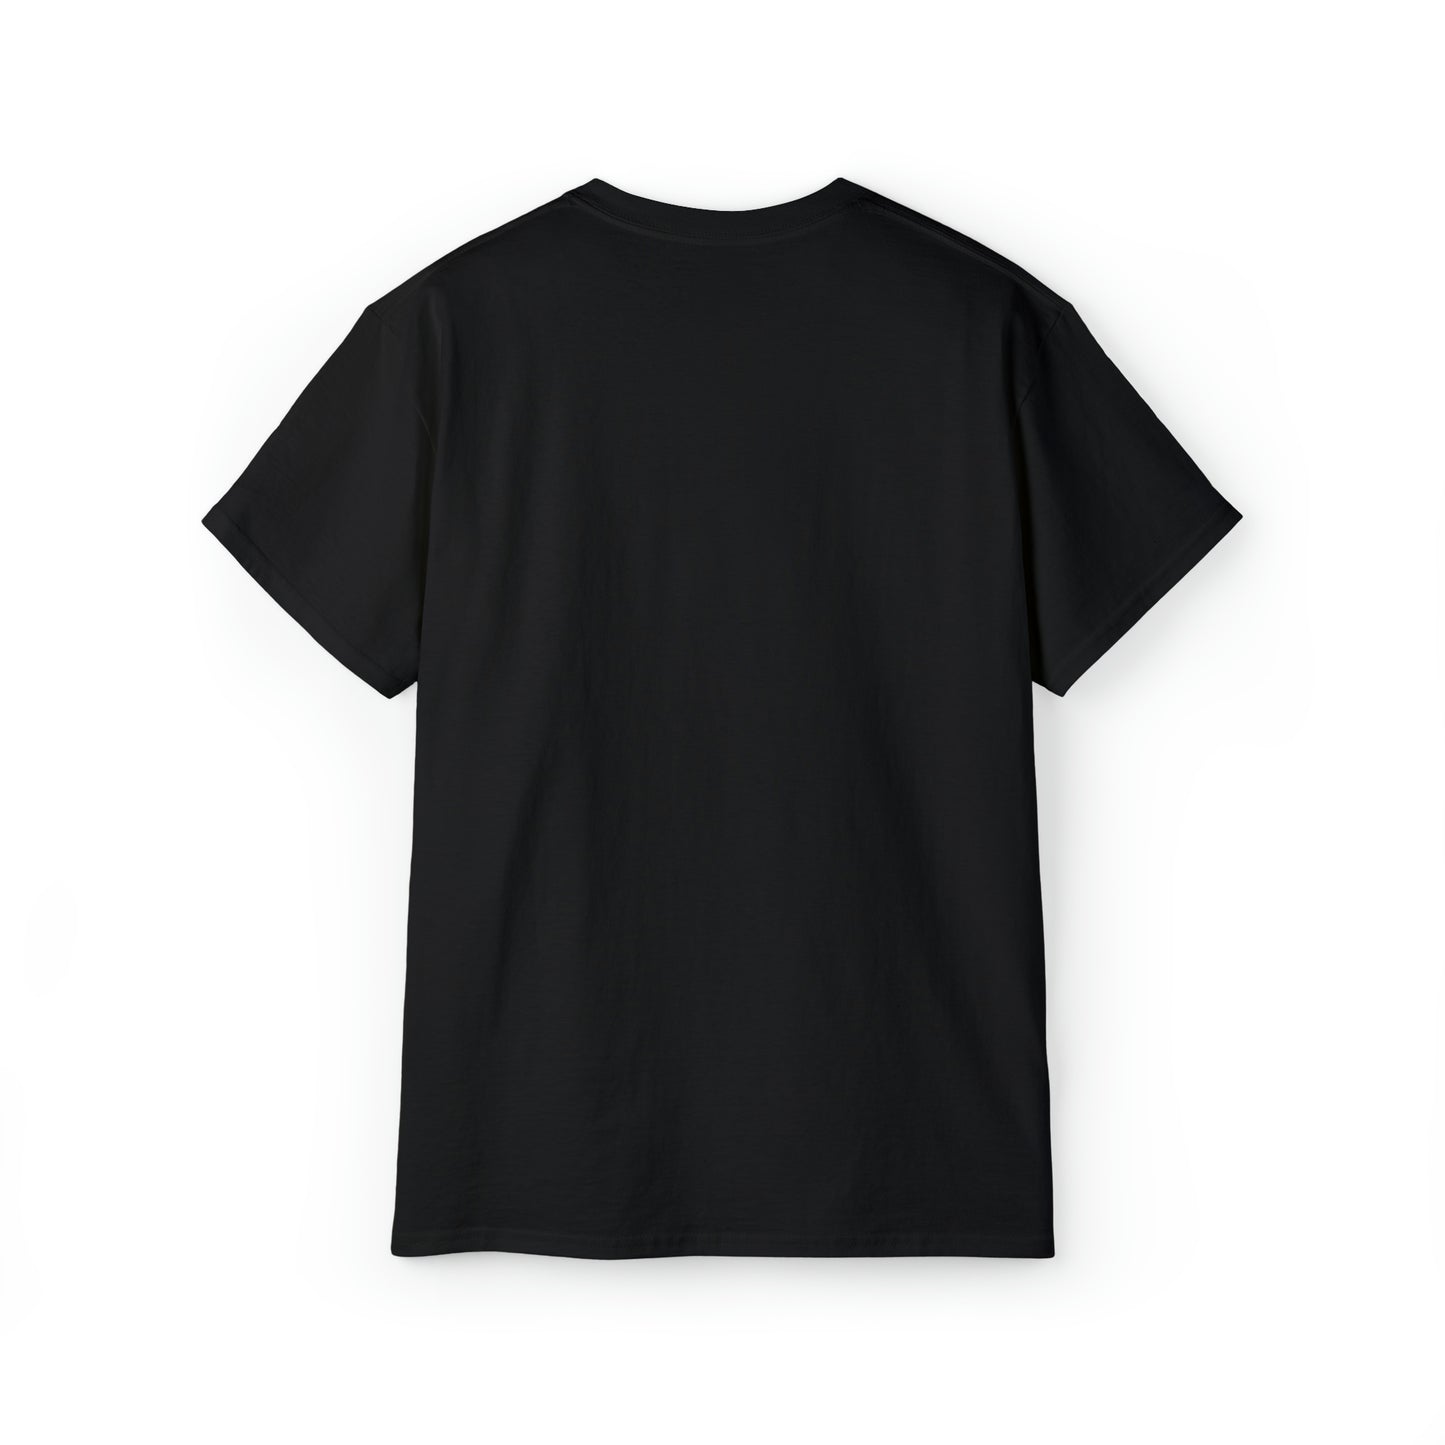 Go Dawgs Black T-Shirt